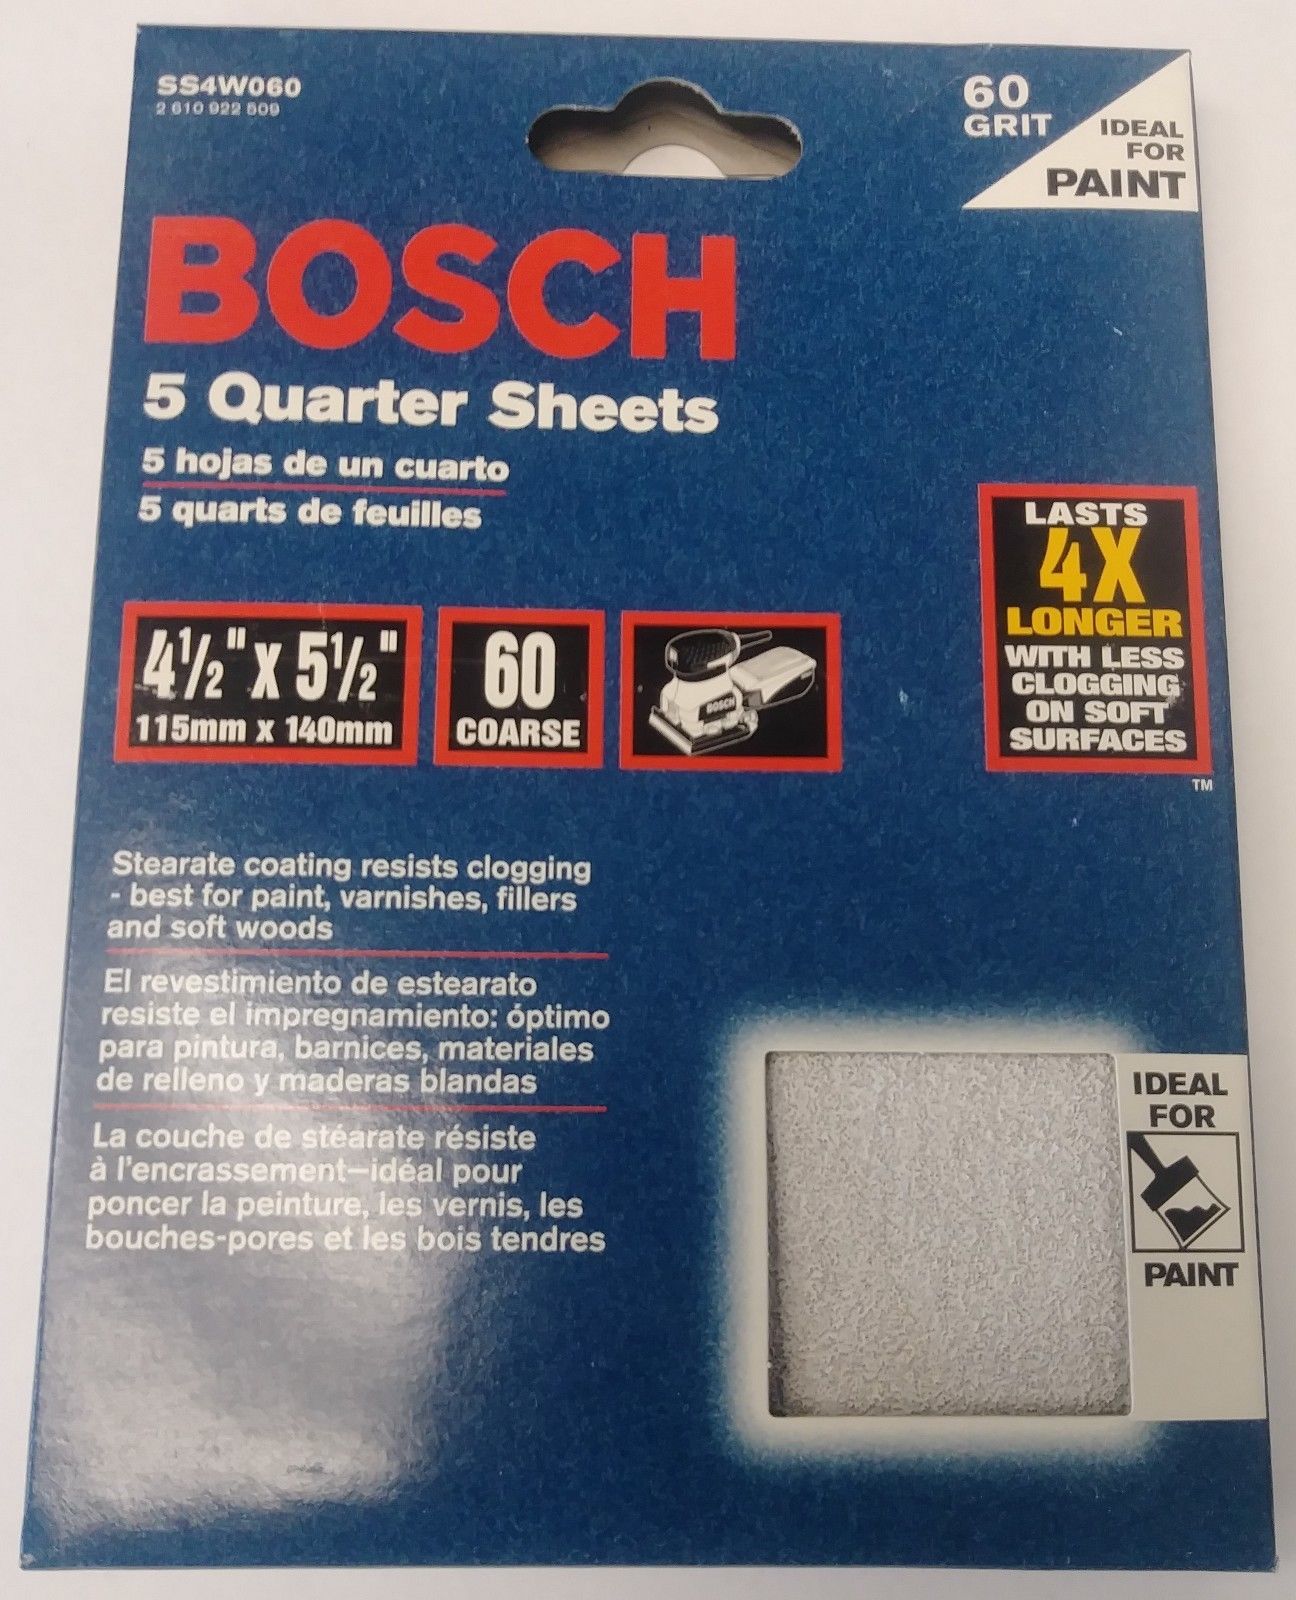 Bosch SS4W060 5 Piece 60 Grit 4-1/2" x 5-1/2" General Purpose Sanding Sheets